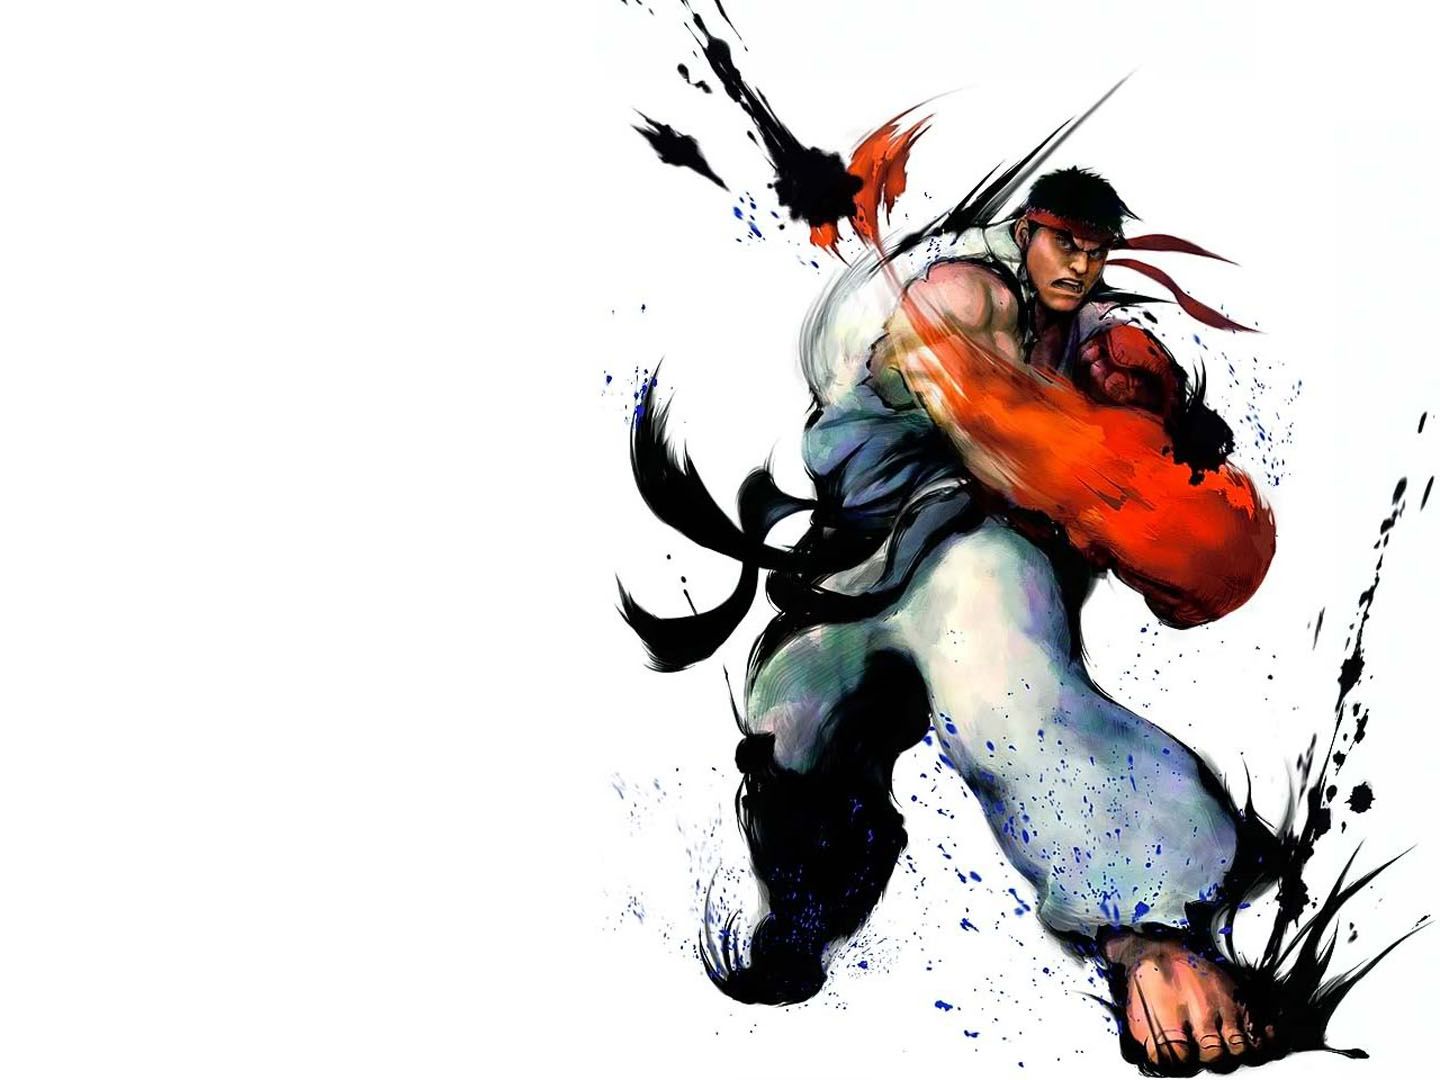 Free download Ryu Street Fighter Wallpaper Street Fighter Ryu